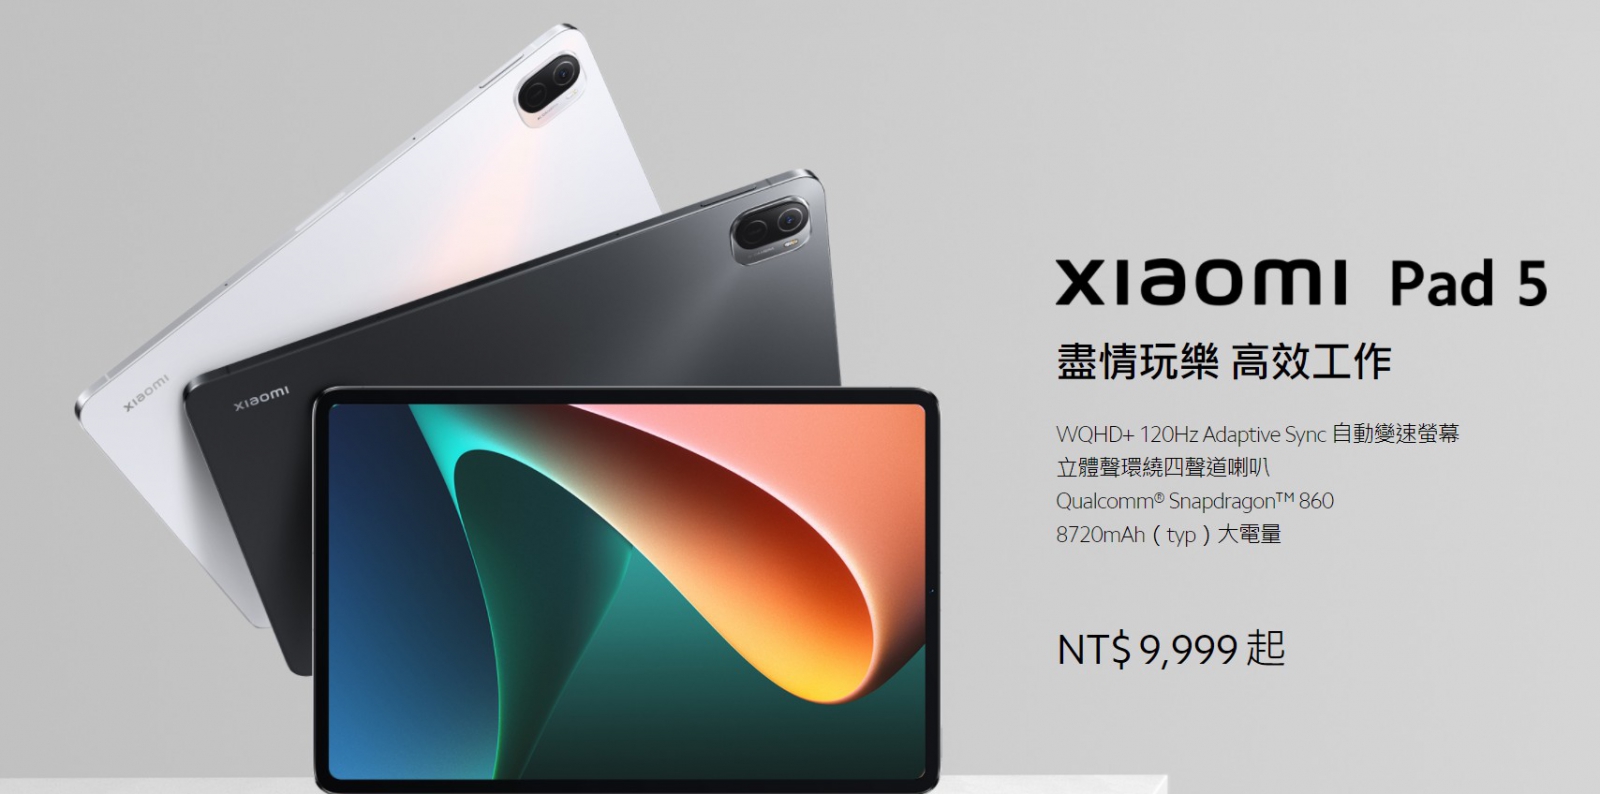 Xiaomi pad 5 グレー 256GB 新品 未開封 国内正規品 箱シワ有-